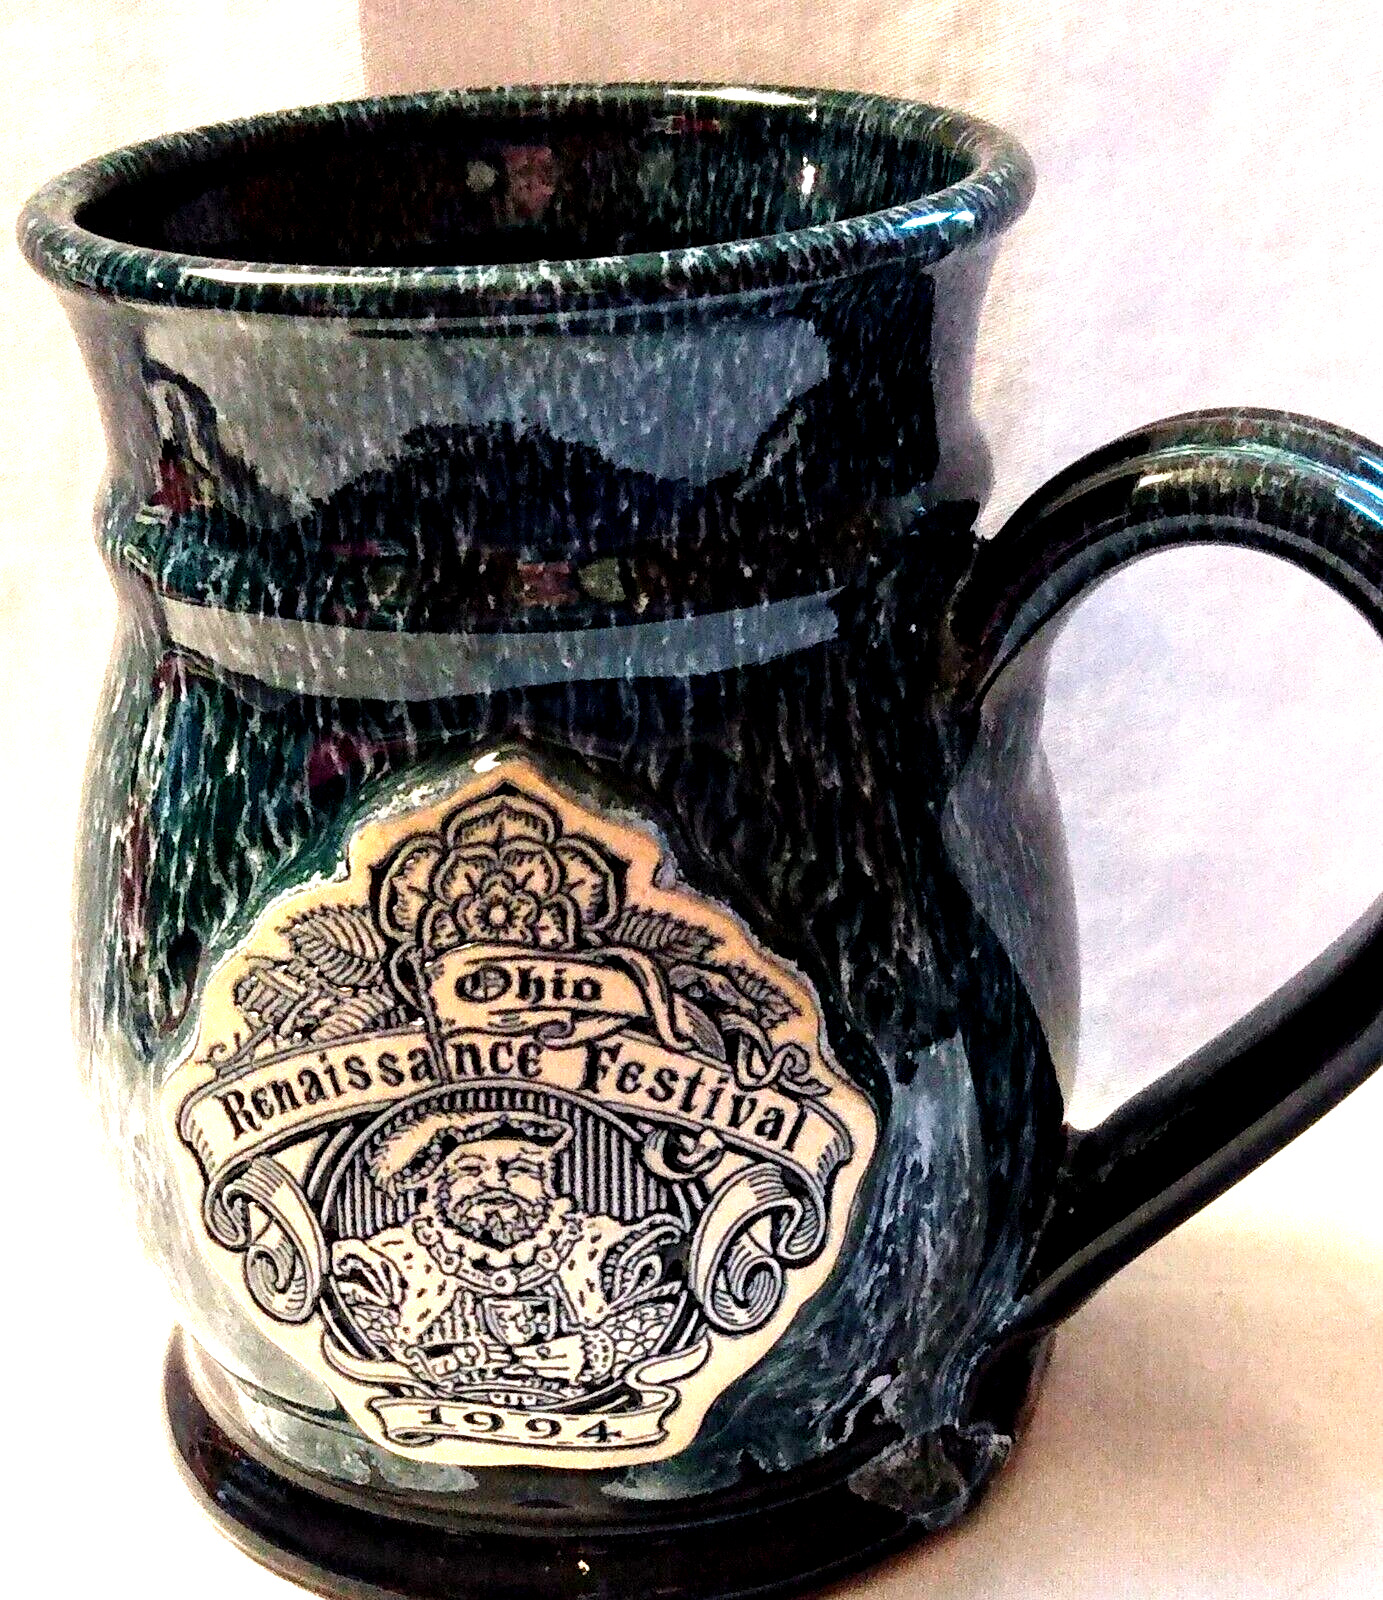 1994 Ohio Renaissance Festival Studio Art Pottery Beer Mug MINT Condition